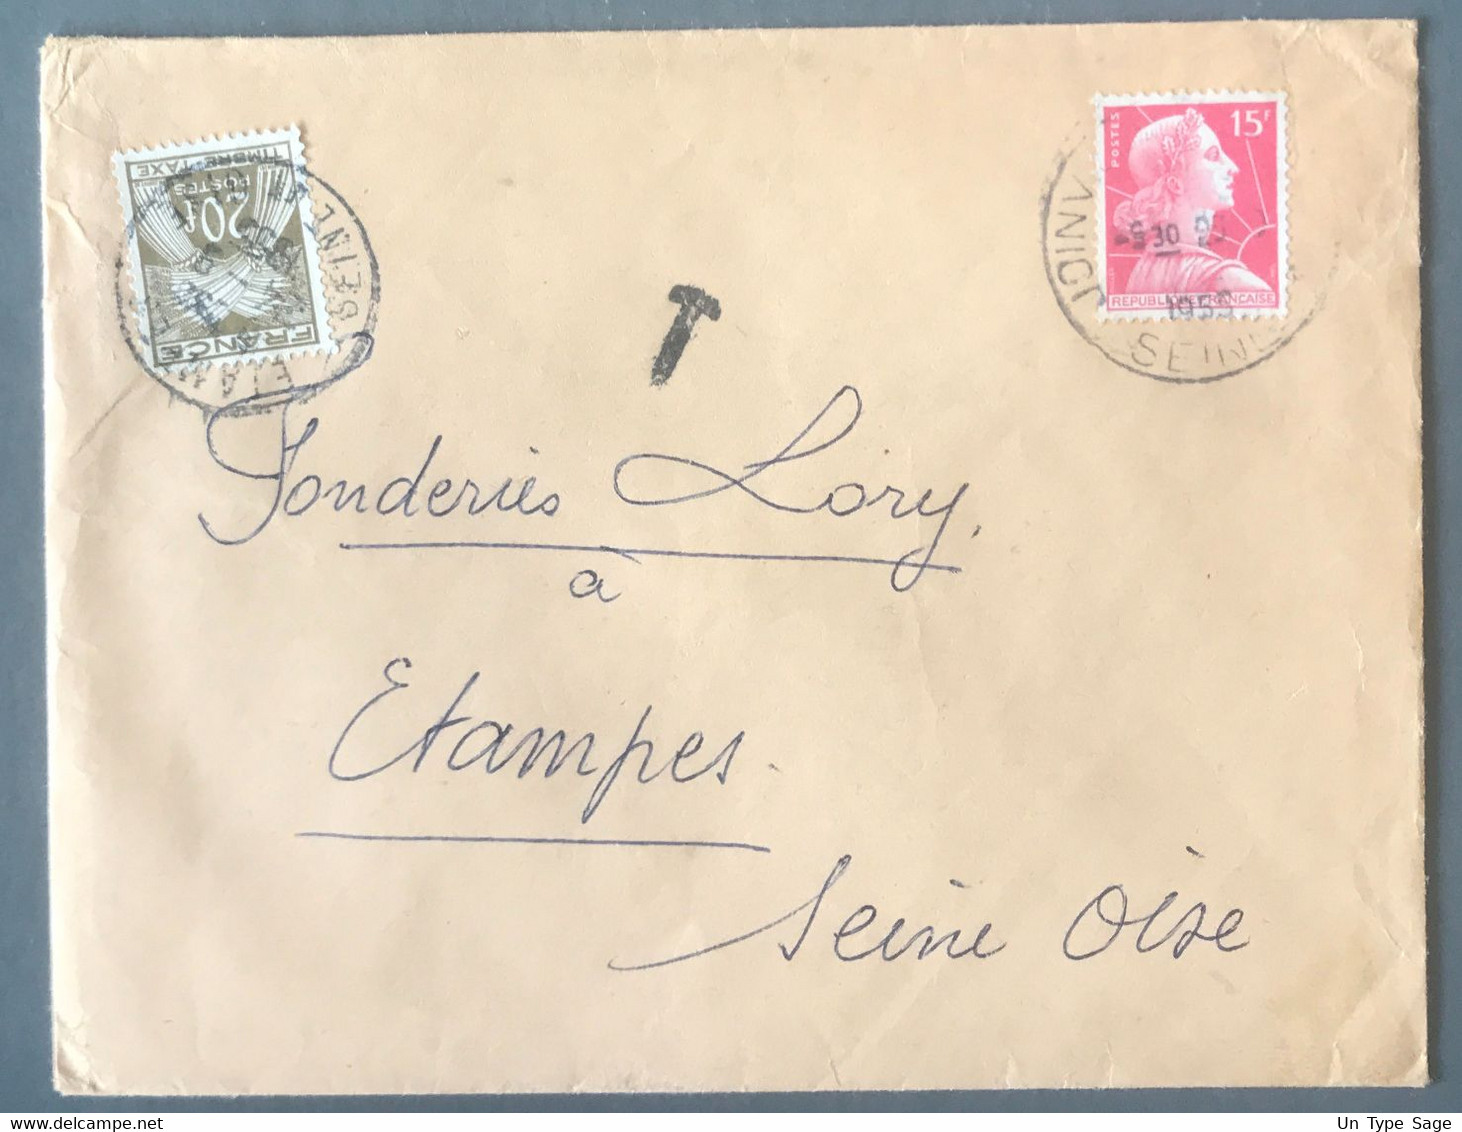 France Taxe N°87 Sur Enveloppe 1955 - (C1494) - 1859-1959 Briefe & Dokumente